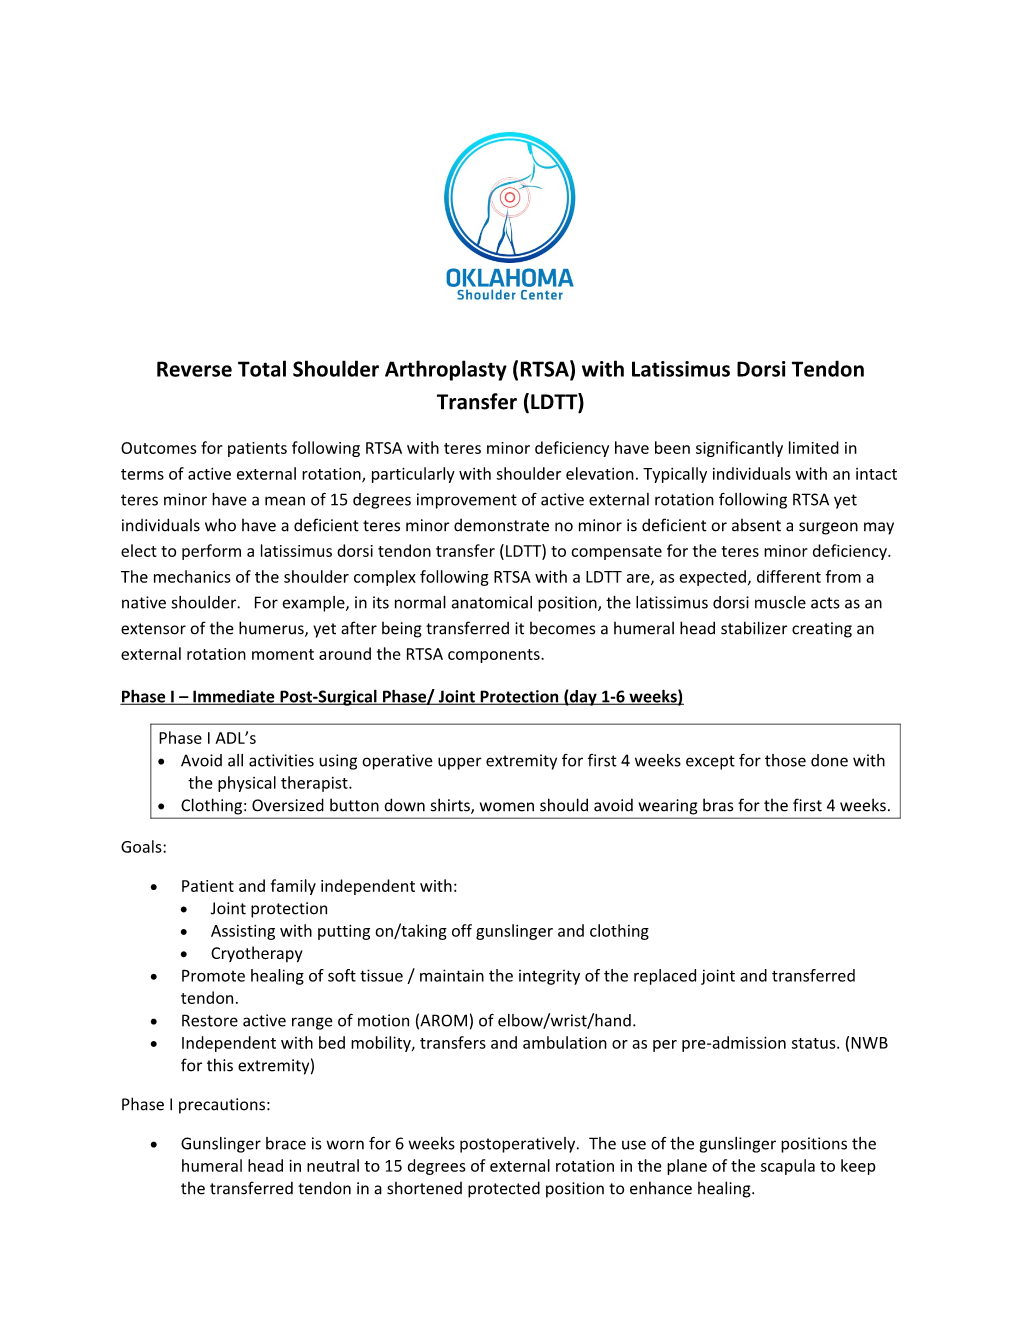 Reverse Total Shoulder Arthroplasty (RTSA) with Latissimus Dorsi Tendon Transfer (LDTT)